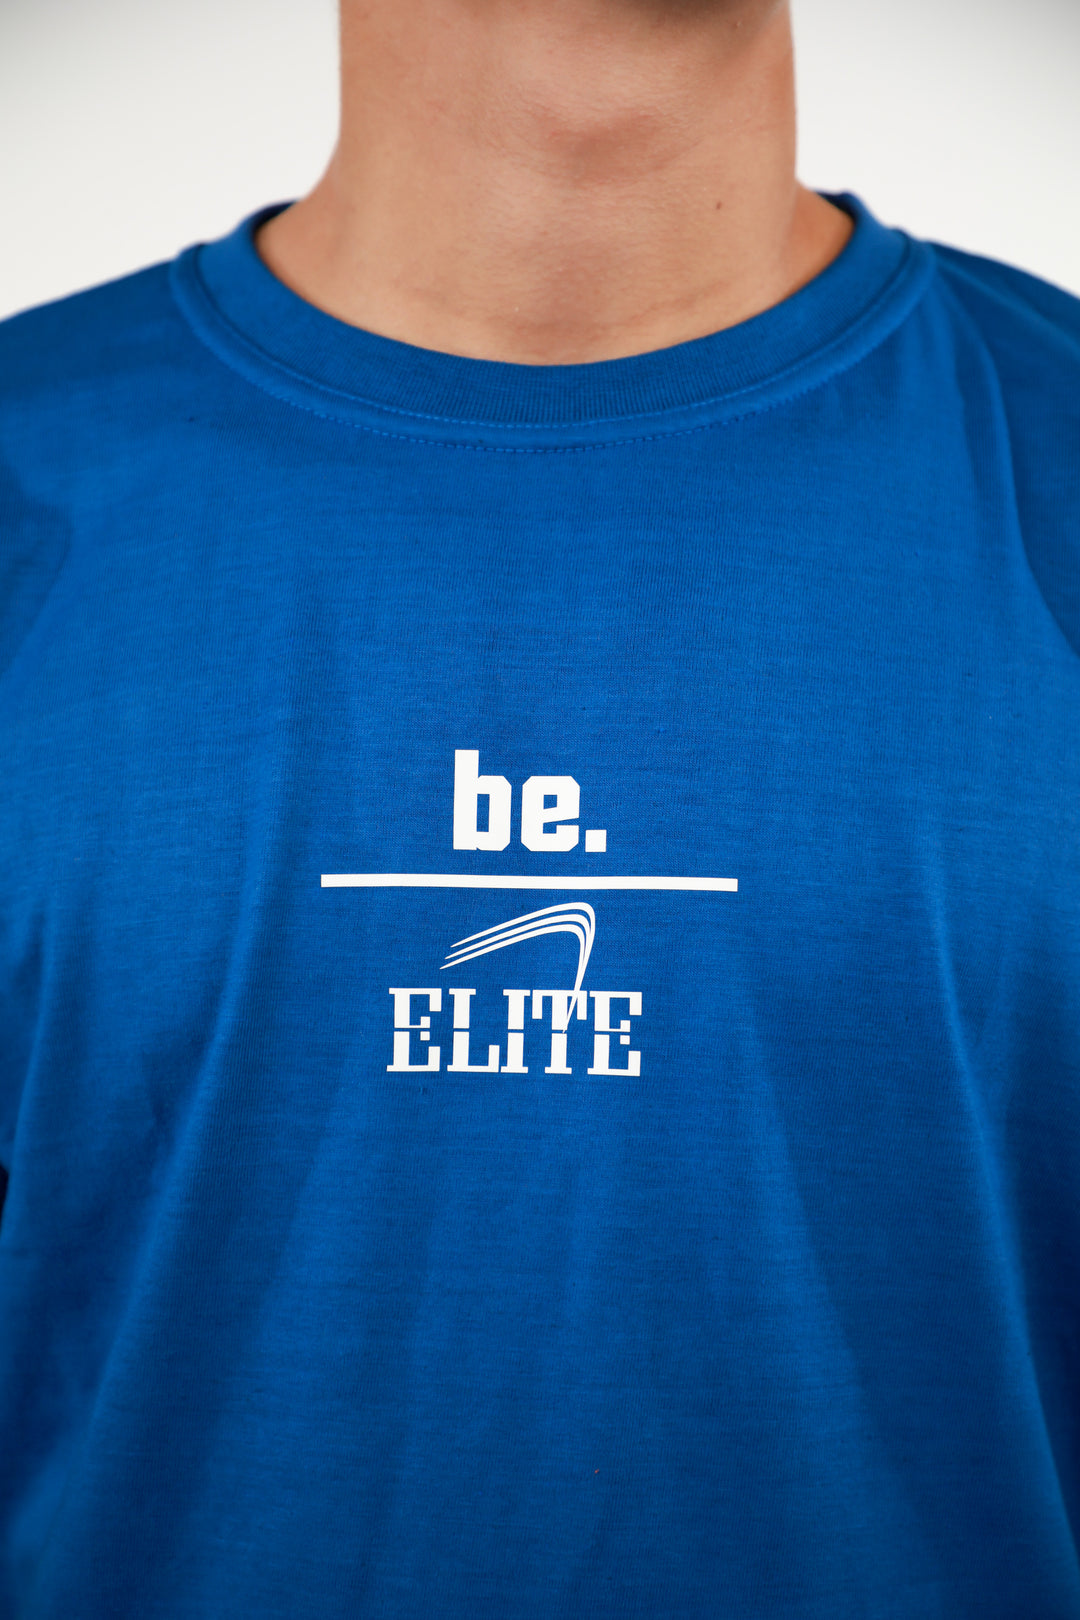 Elite - Shirt - Blue